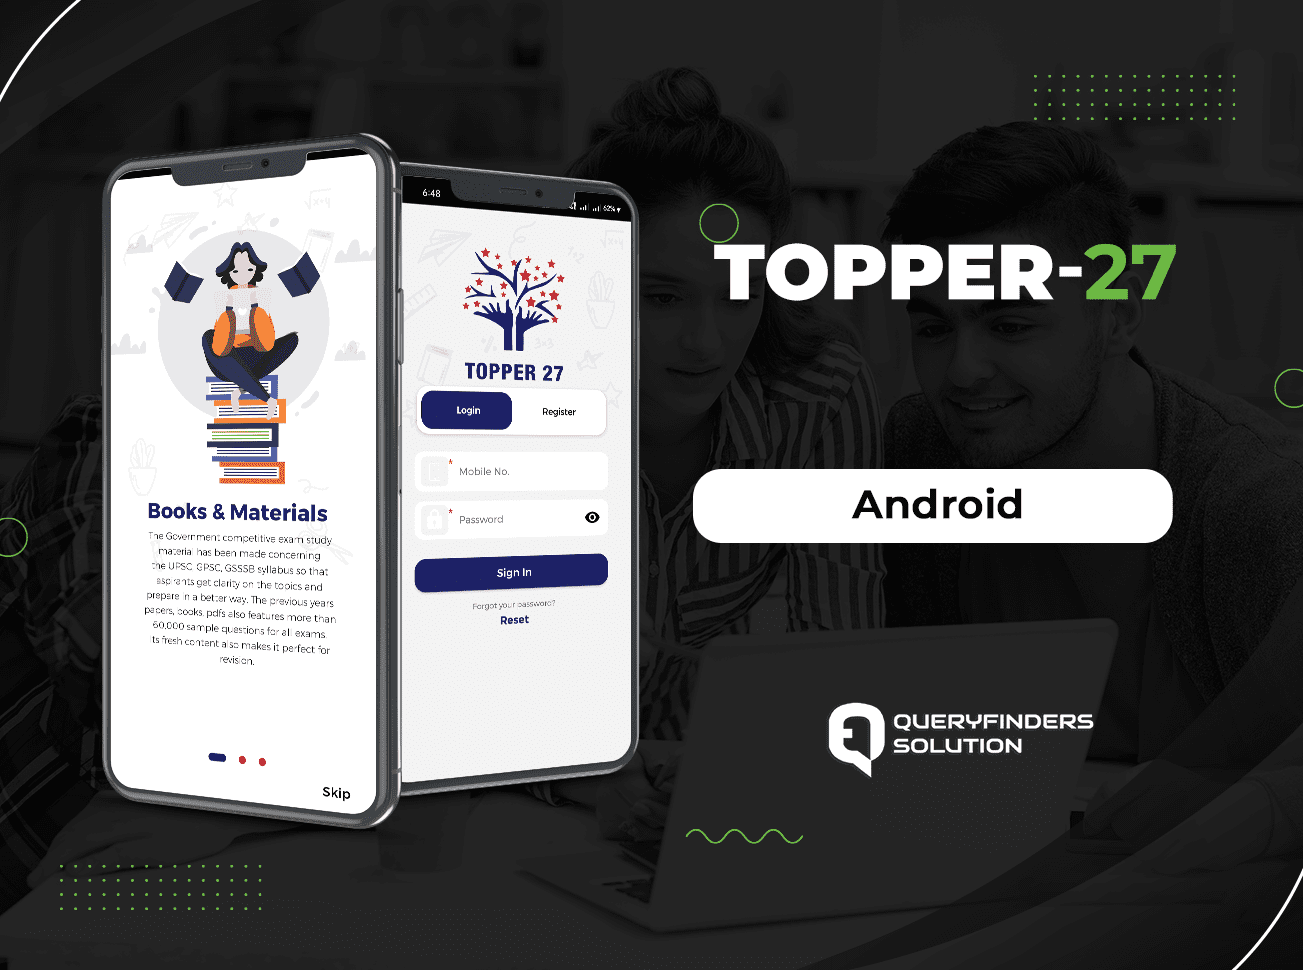 Topper-27